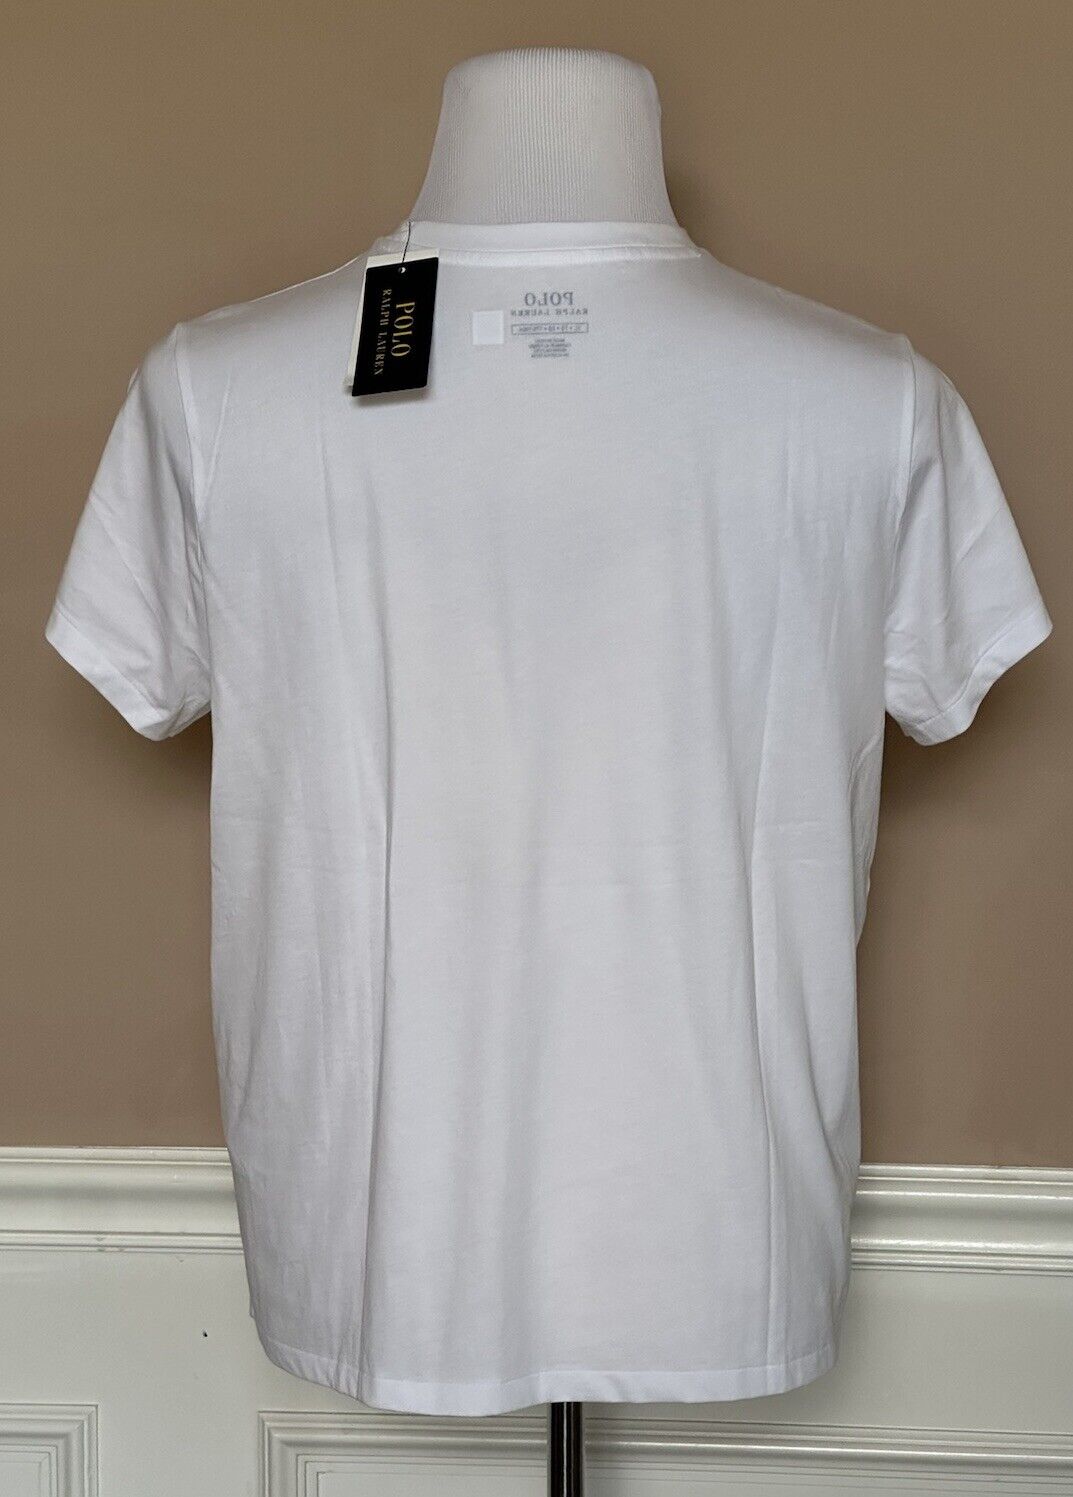 NWT $78 Polo Ralph Lauren USA Flag White Short Sleeve T-Shirt Top Medium